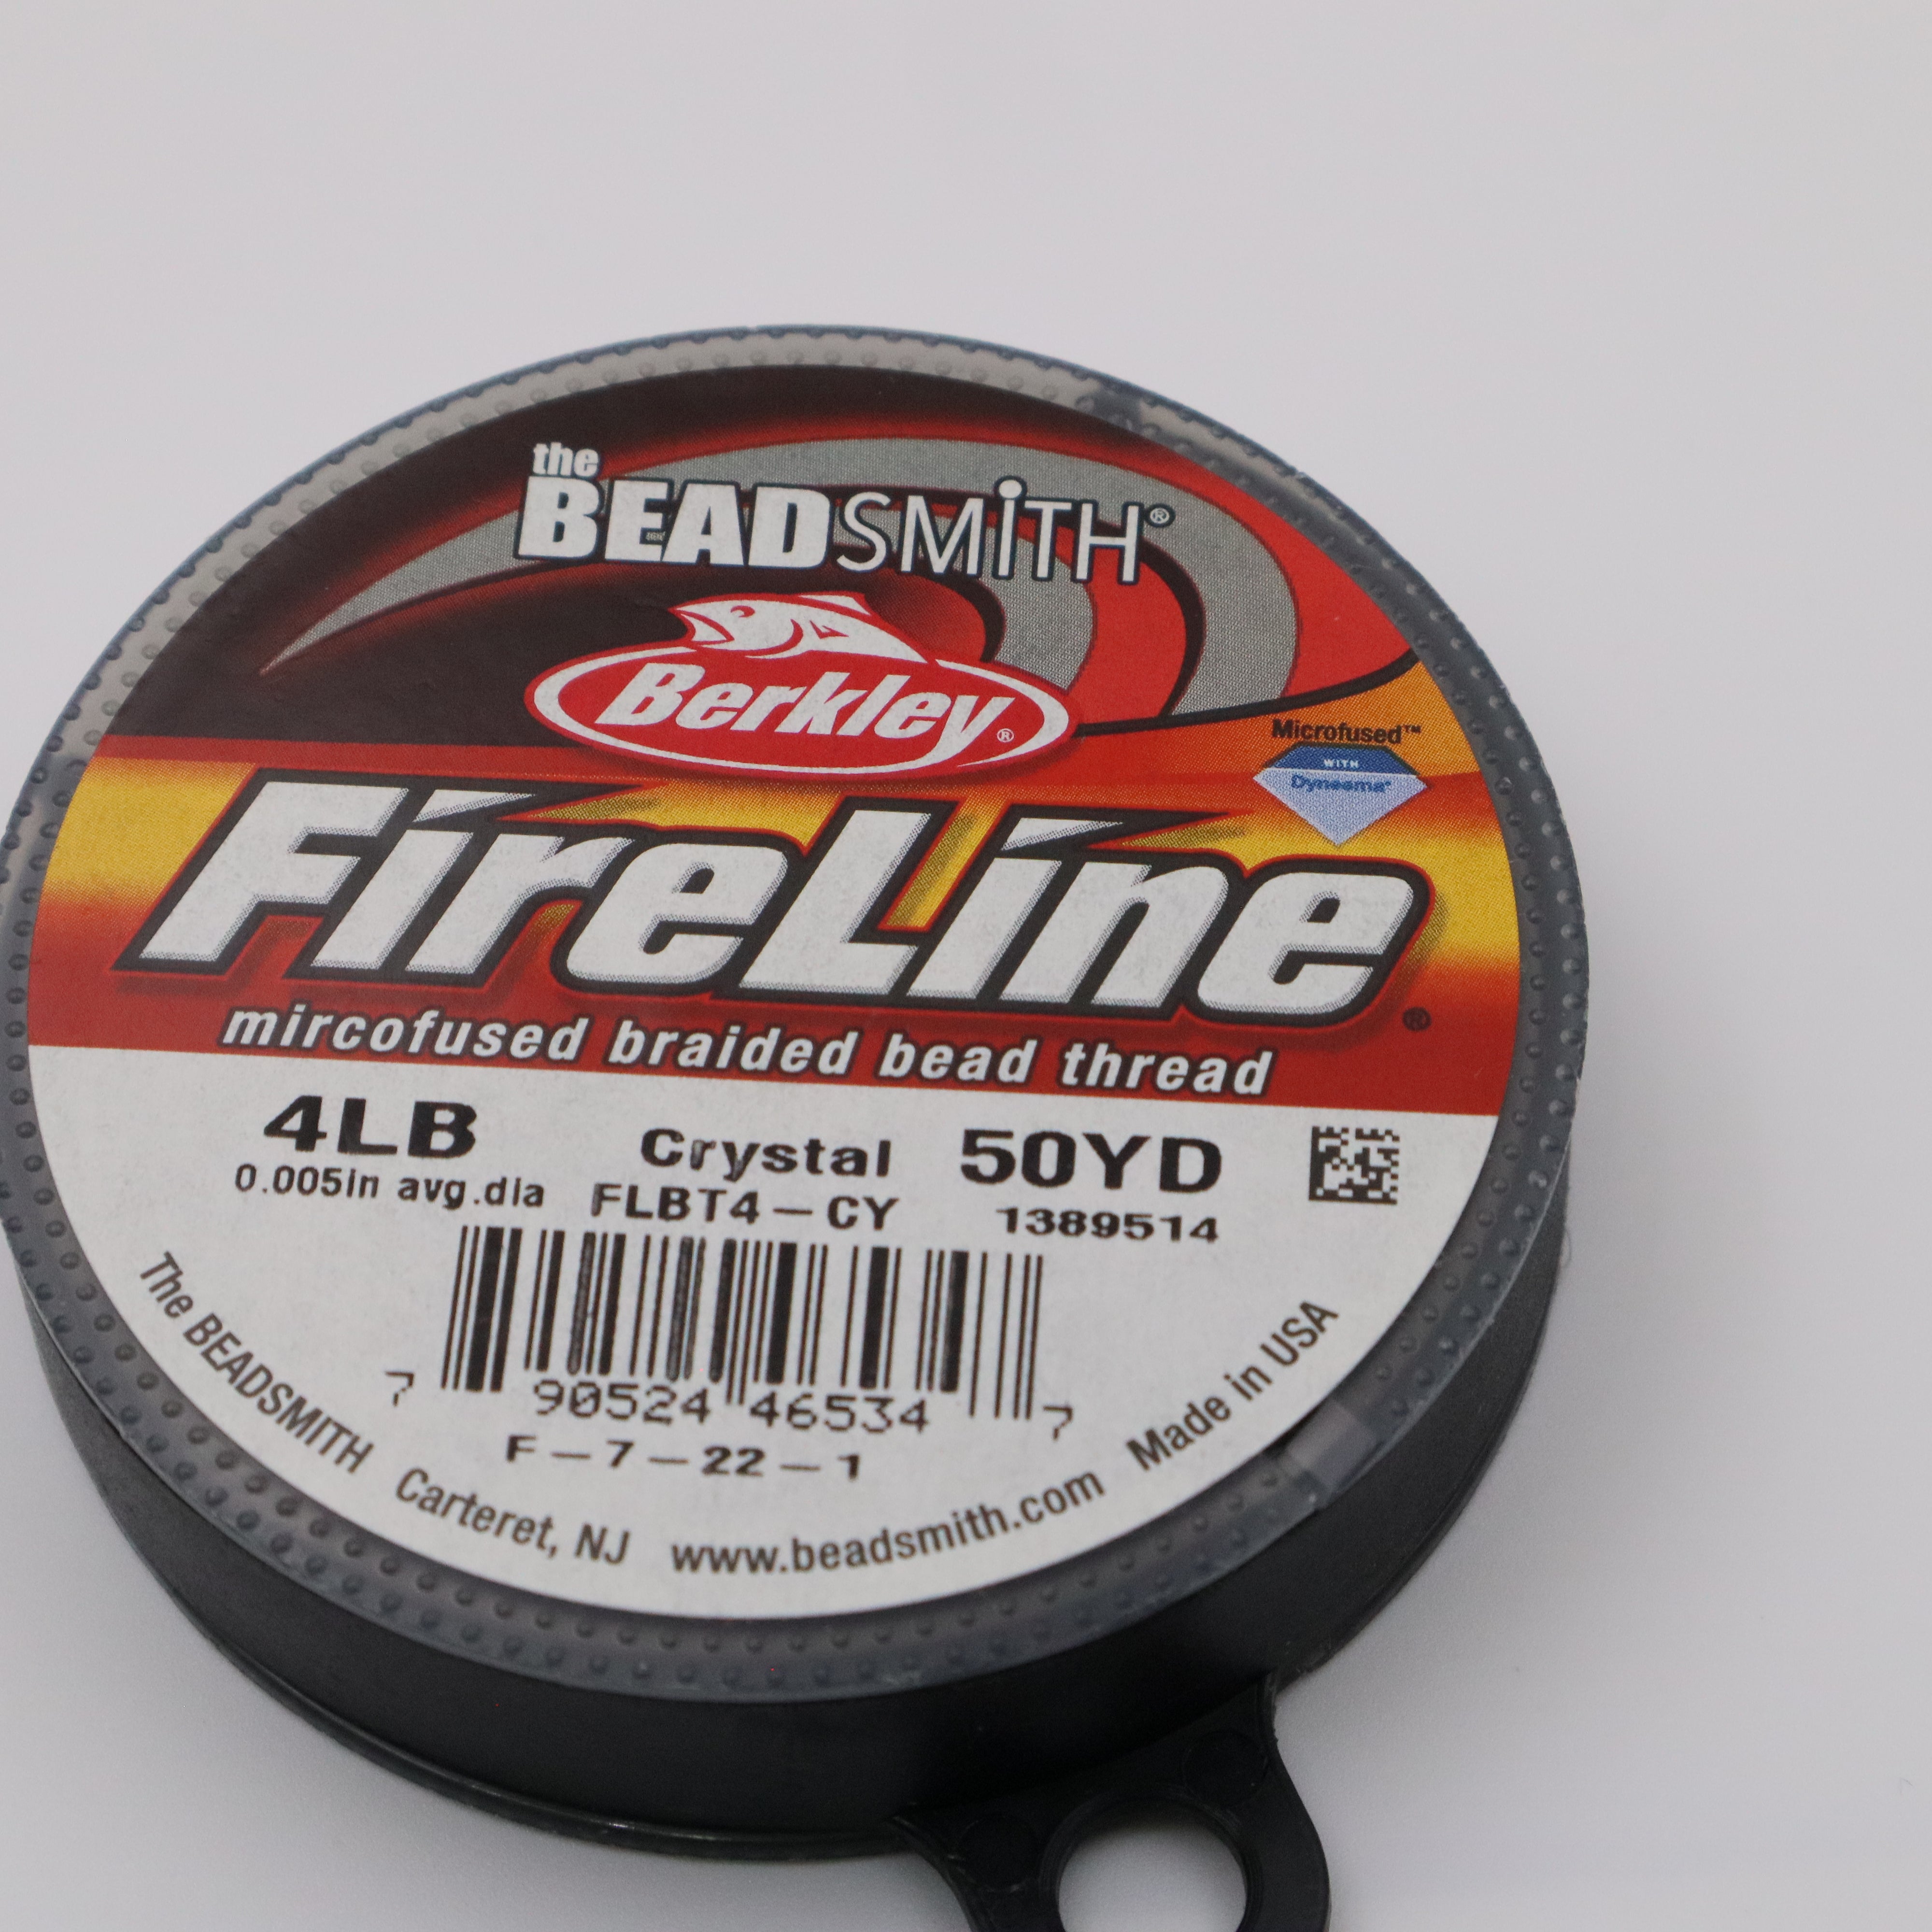 Beadsmith Fireline Microfused Braided Bead Thread 4LB 50 Yard in